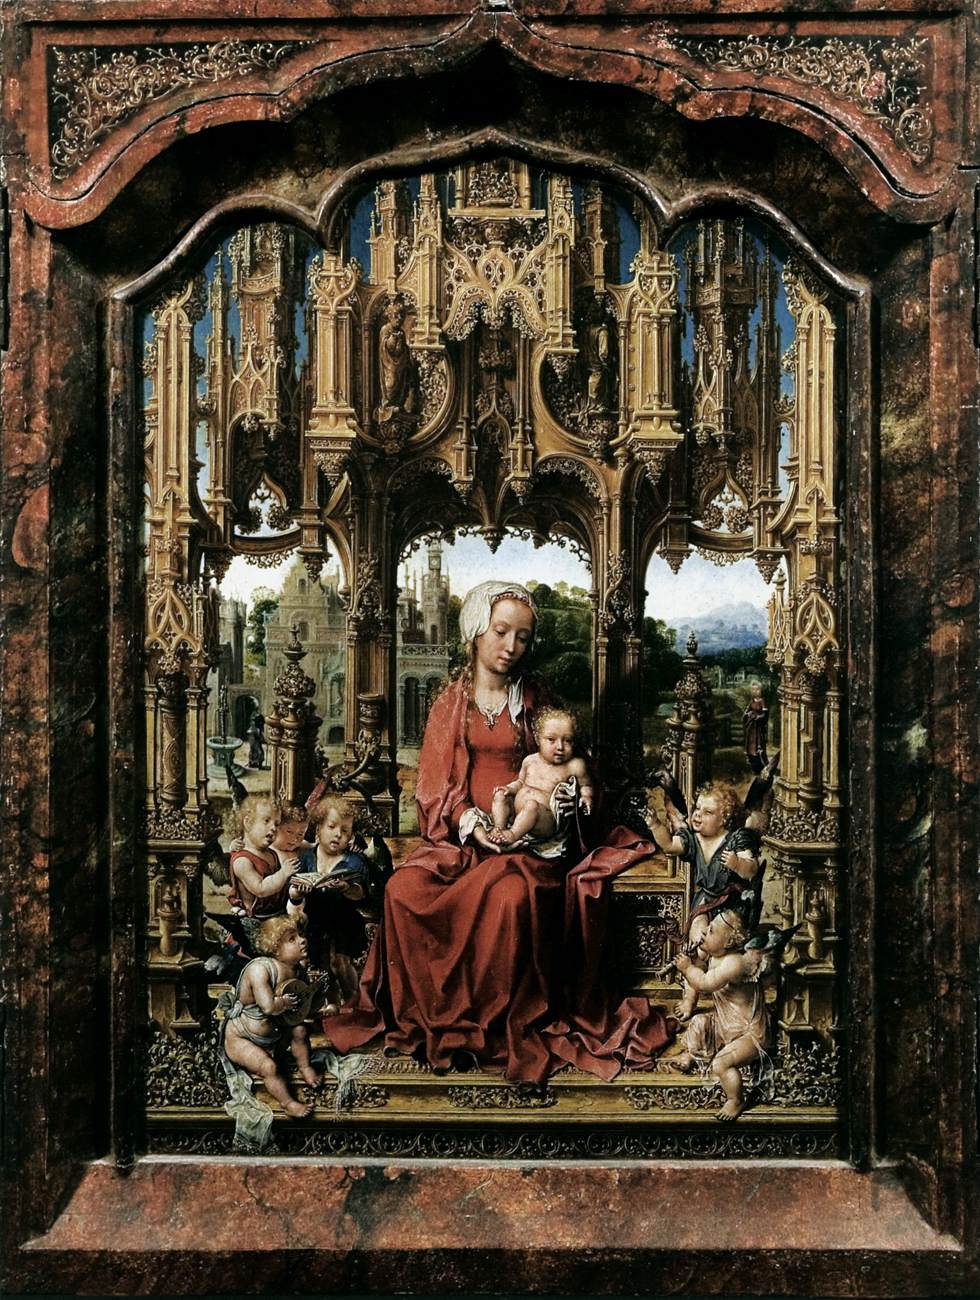 The Malvagna Altarpiece (central panel)